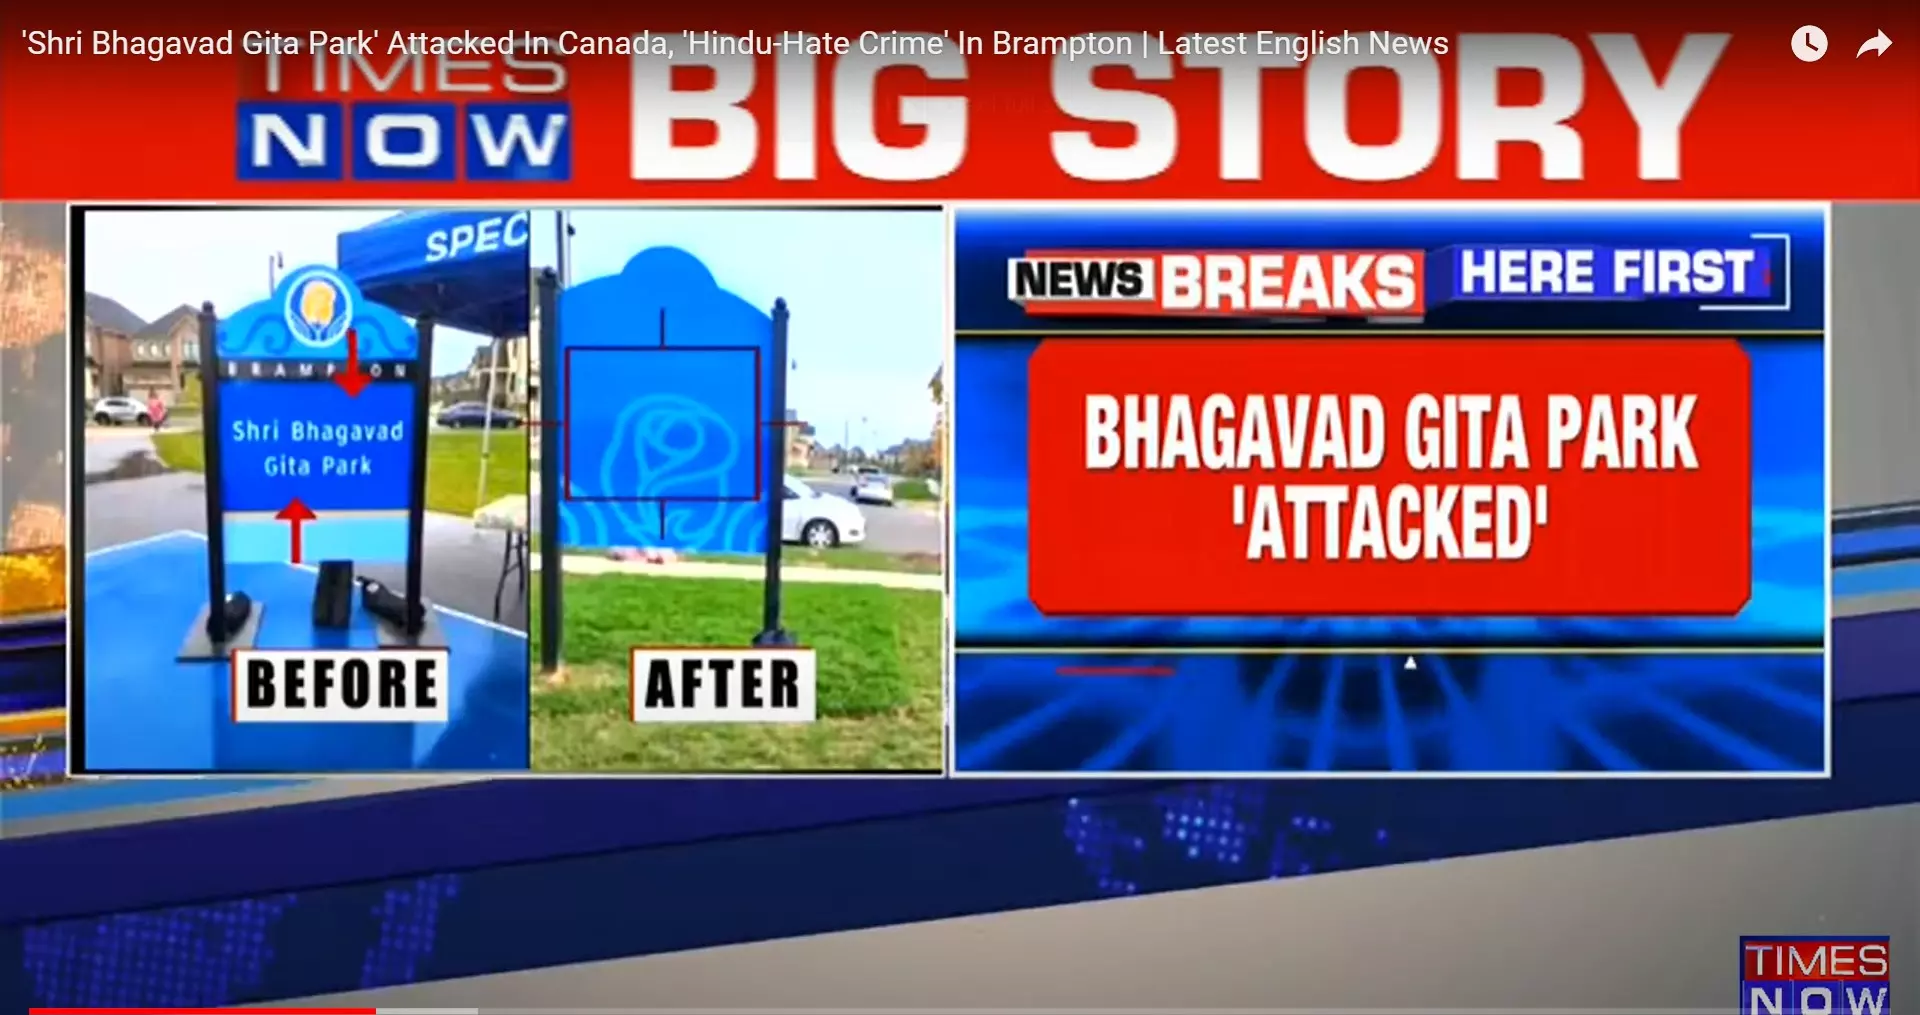 Screenshot of Times Now story claiming vandalism at the Bhagavad Gita Park in Brampton, Canada.